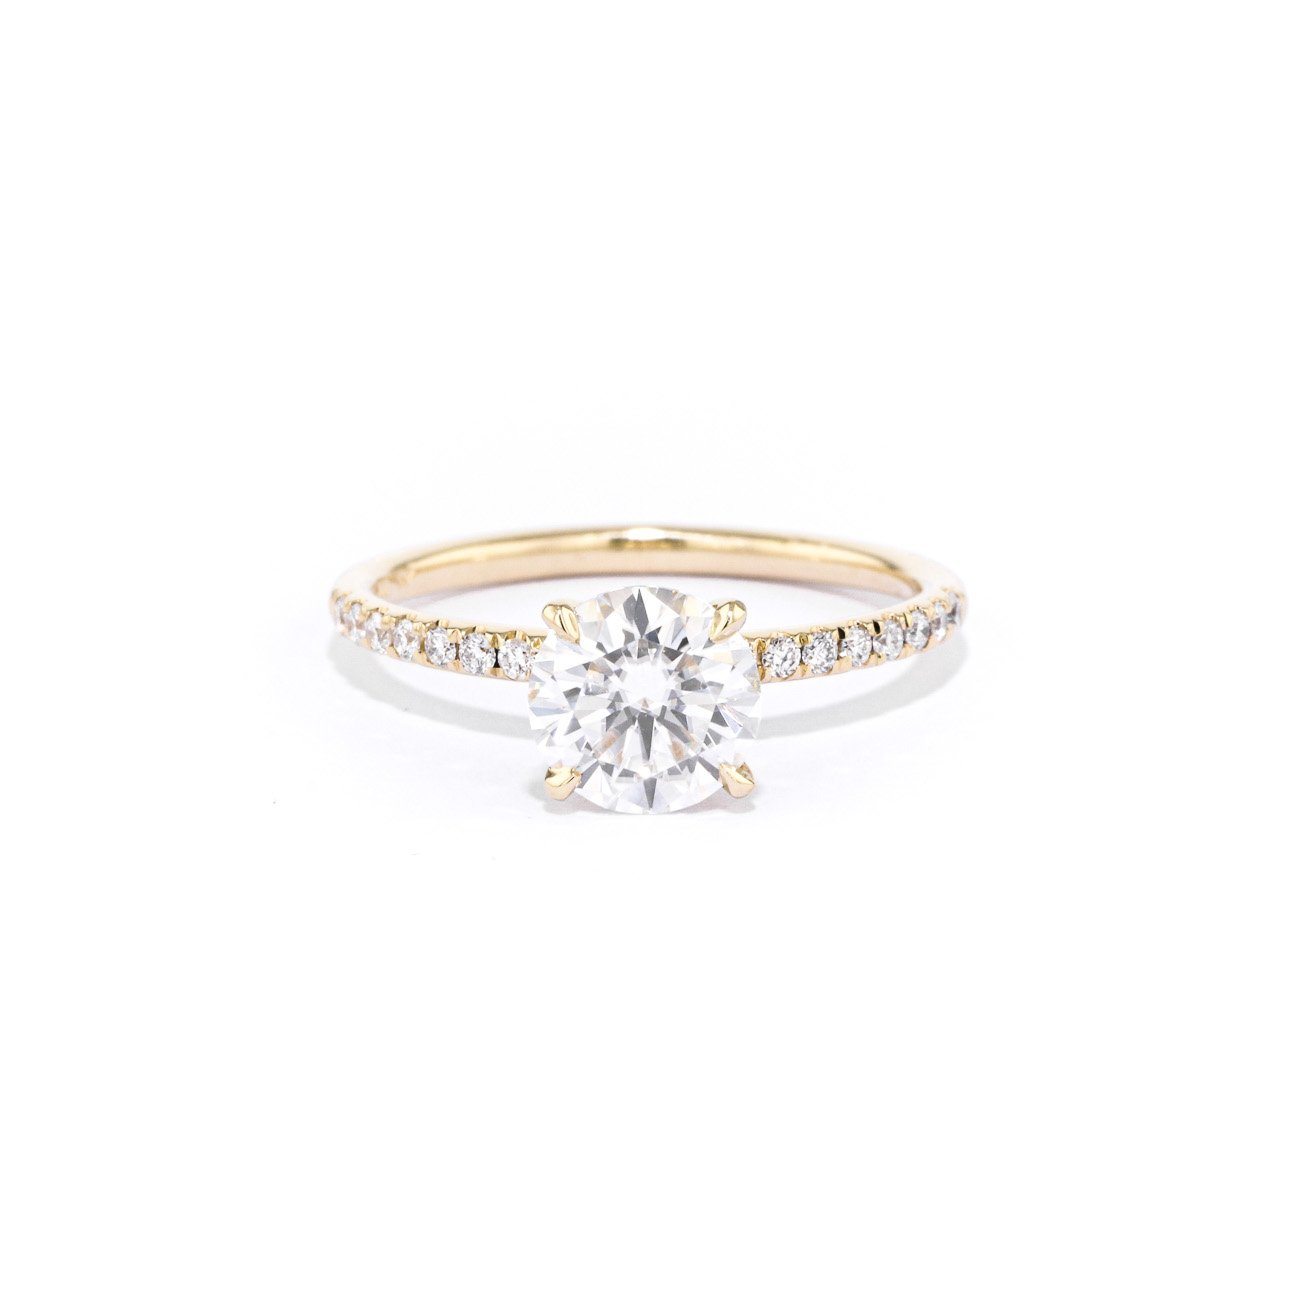 Stephanie Round Engagement Rings Princess Bride Diamonds 3 14K Yellow Gold 